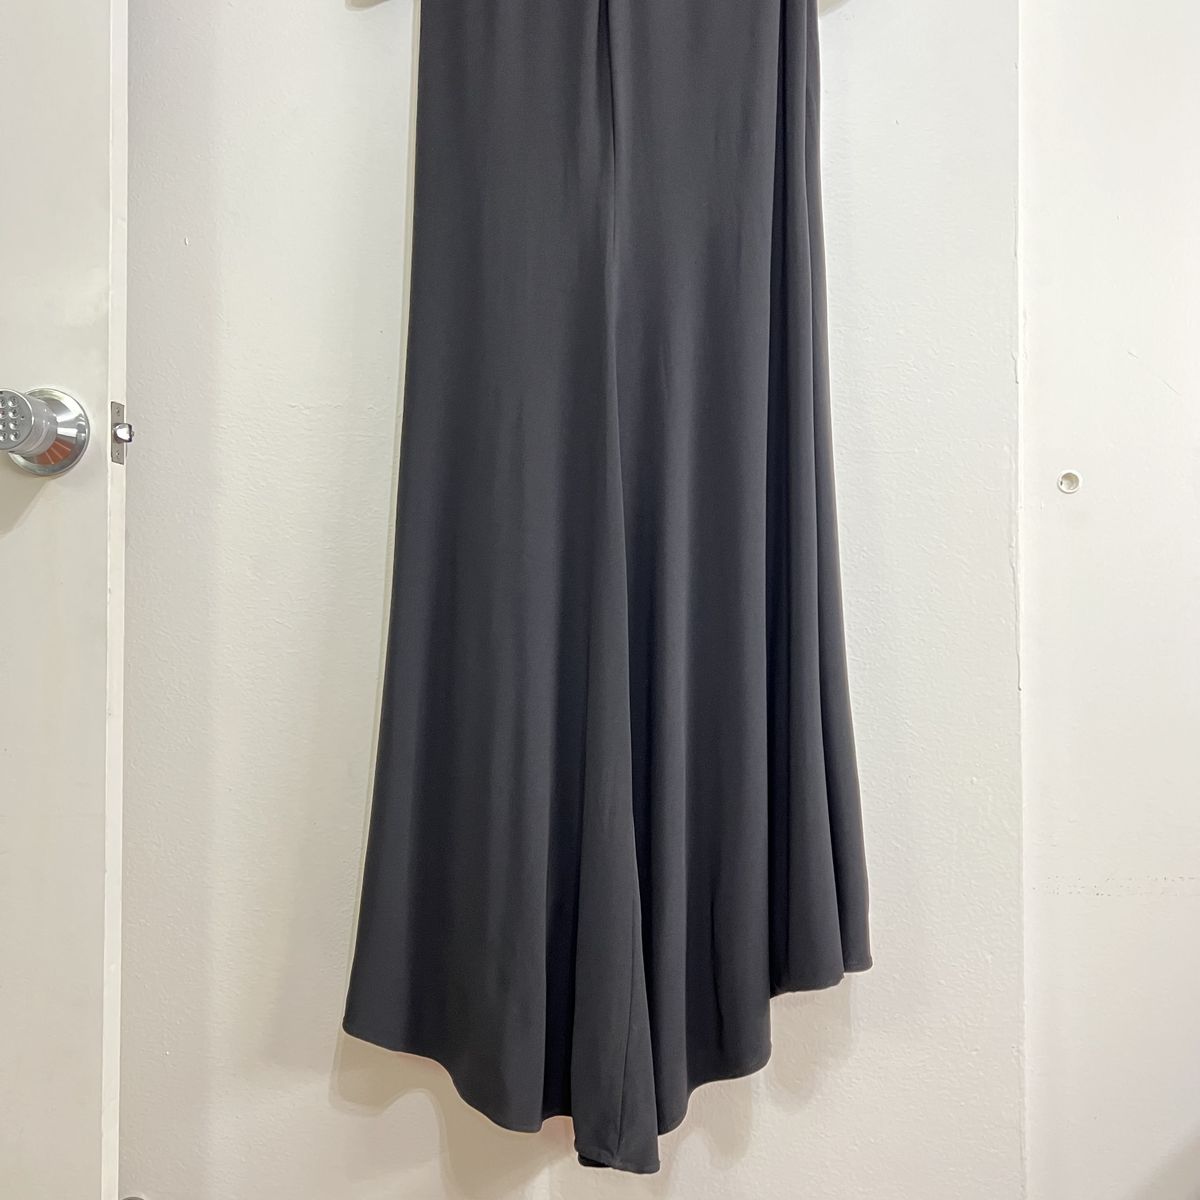 Style 29044 La Femme Plus Size 24 Plunge Black Side Slit Dress on Queenly